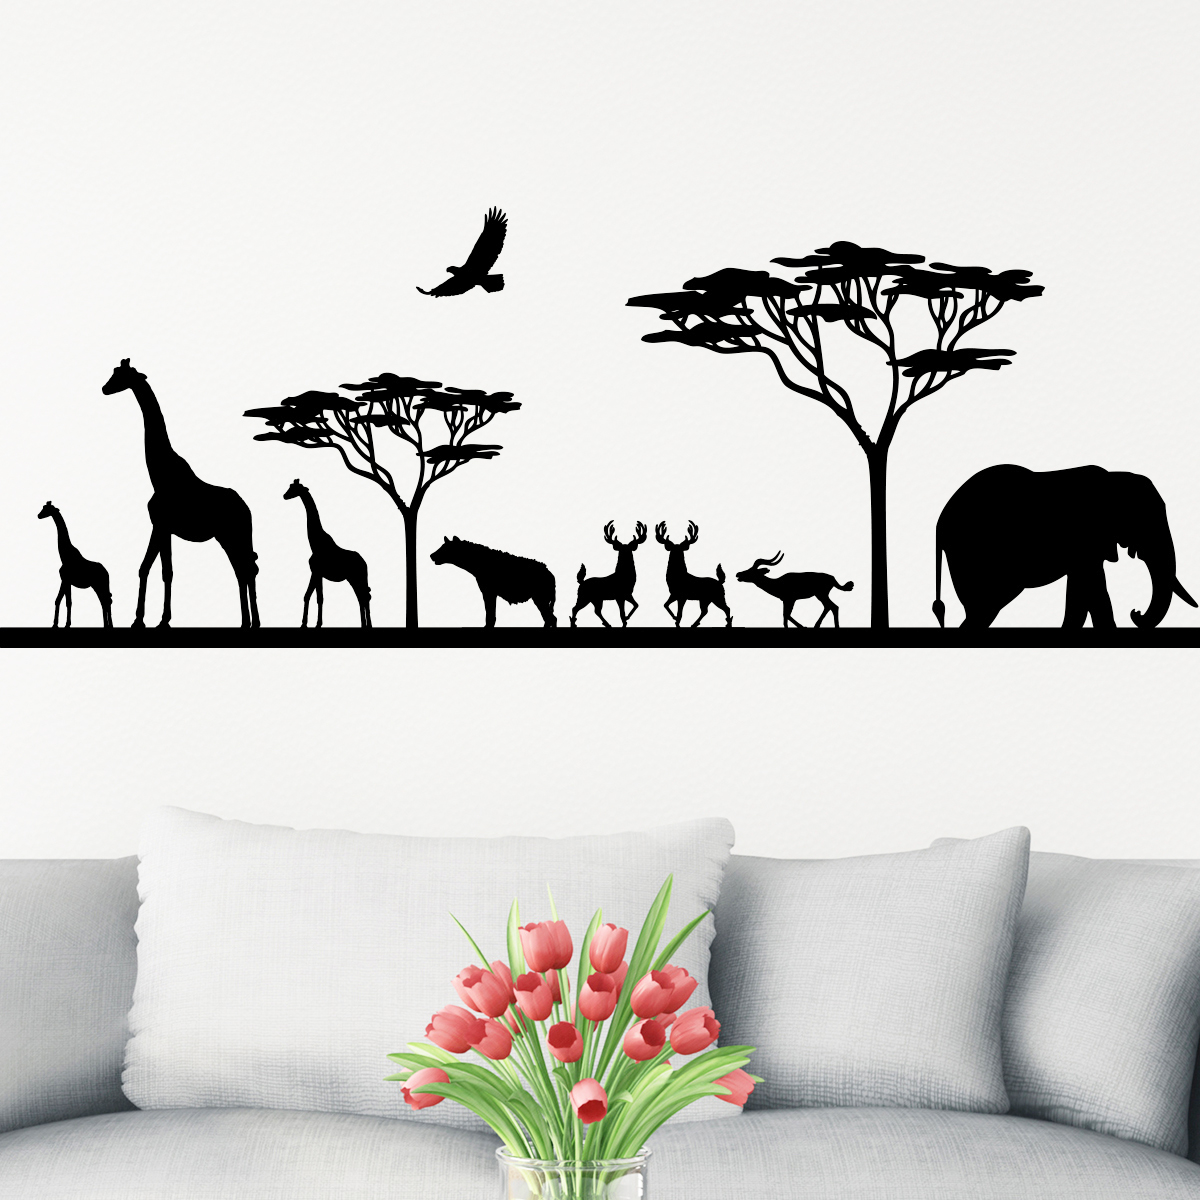 Stickers muraux I sticker mural savane Afrique animaux sauvages